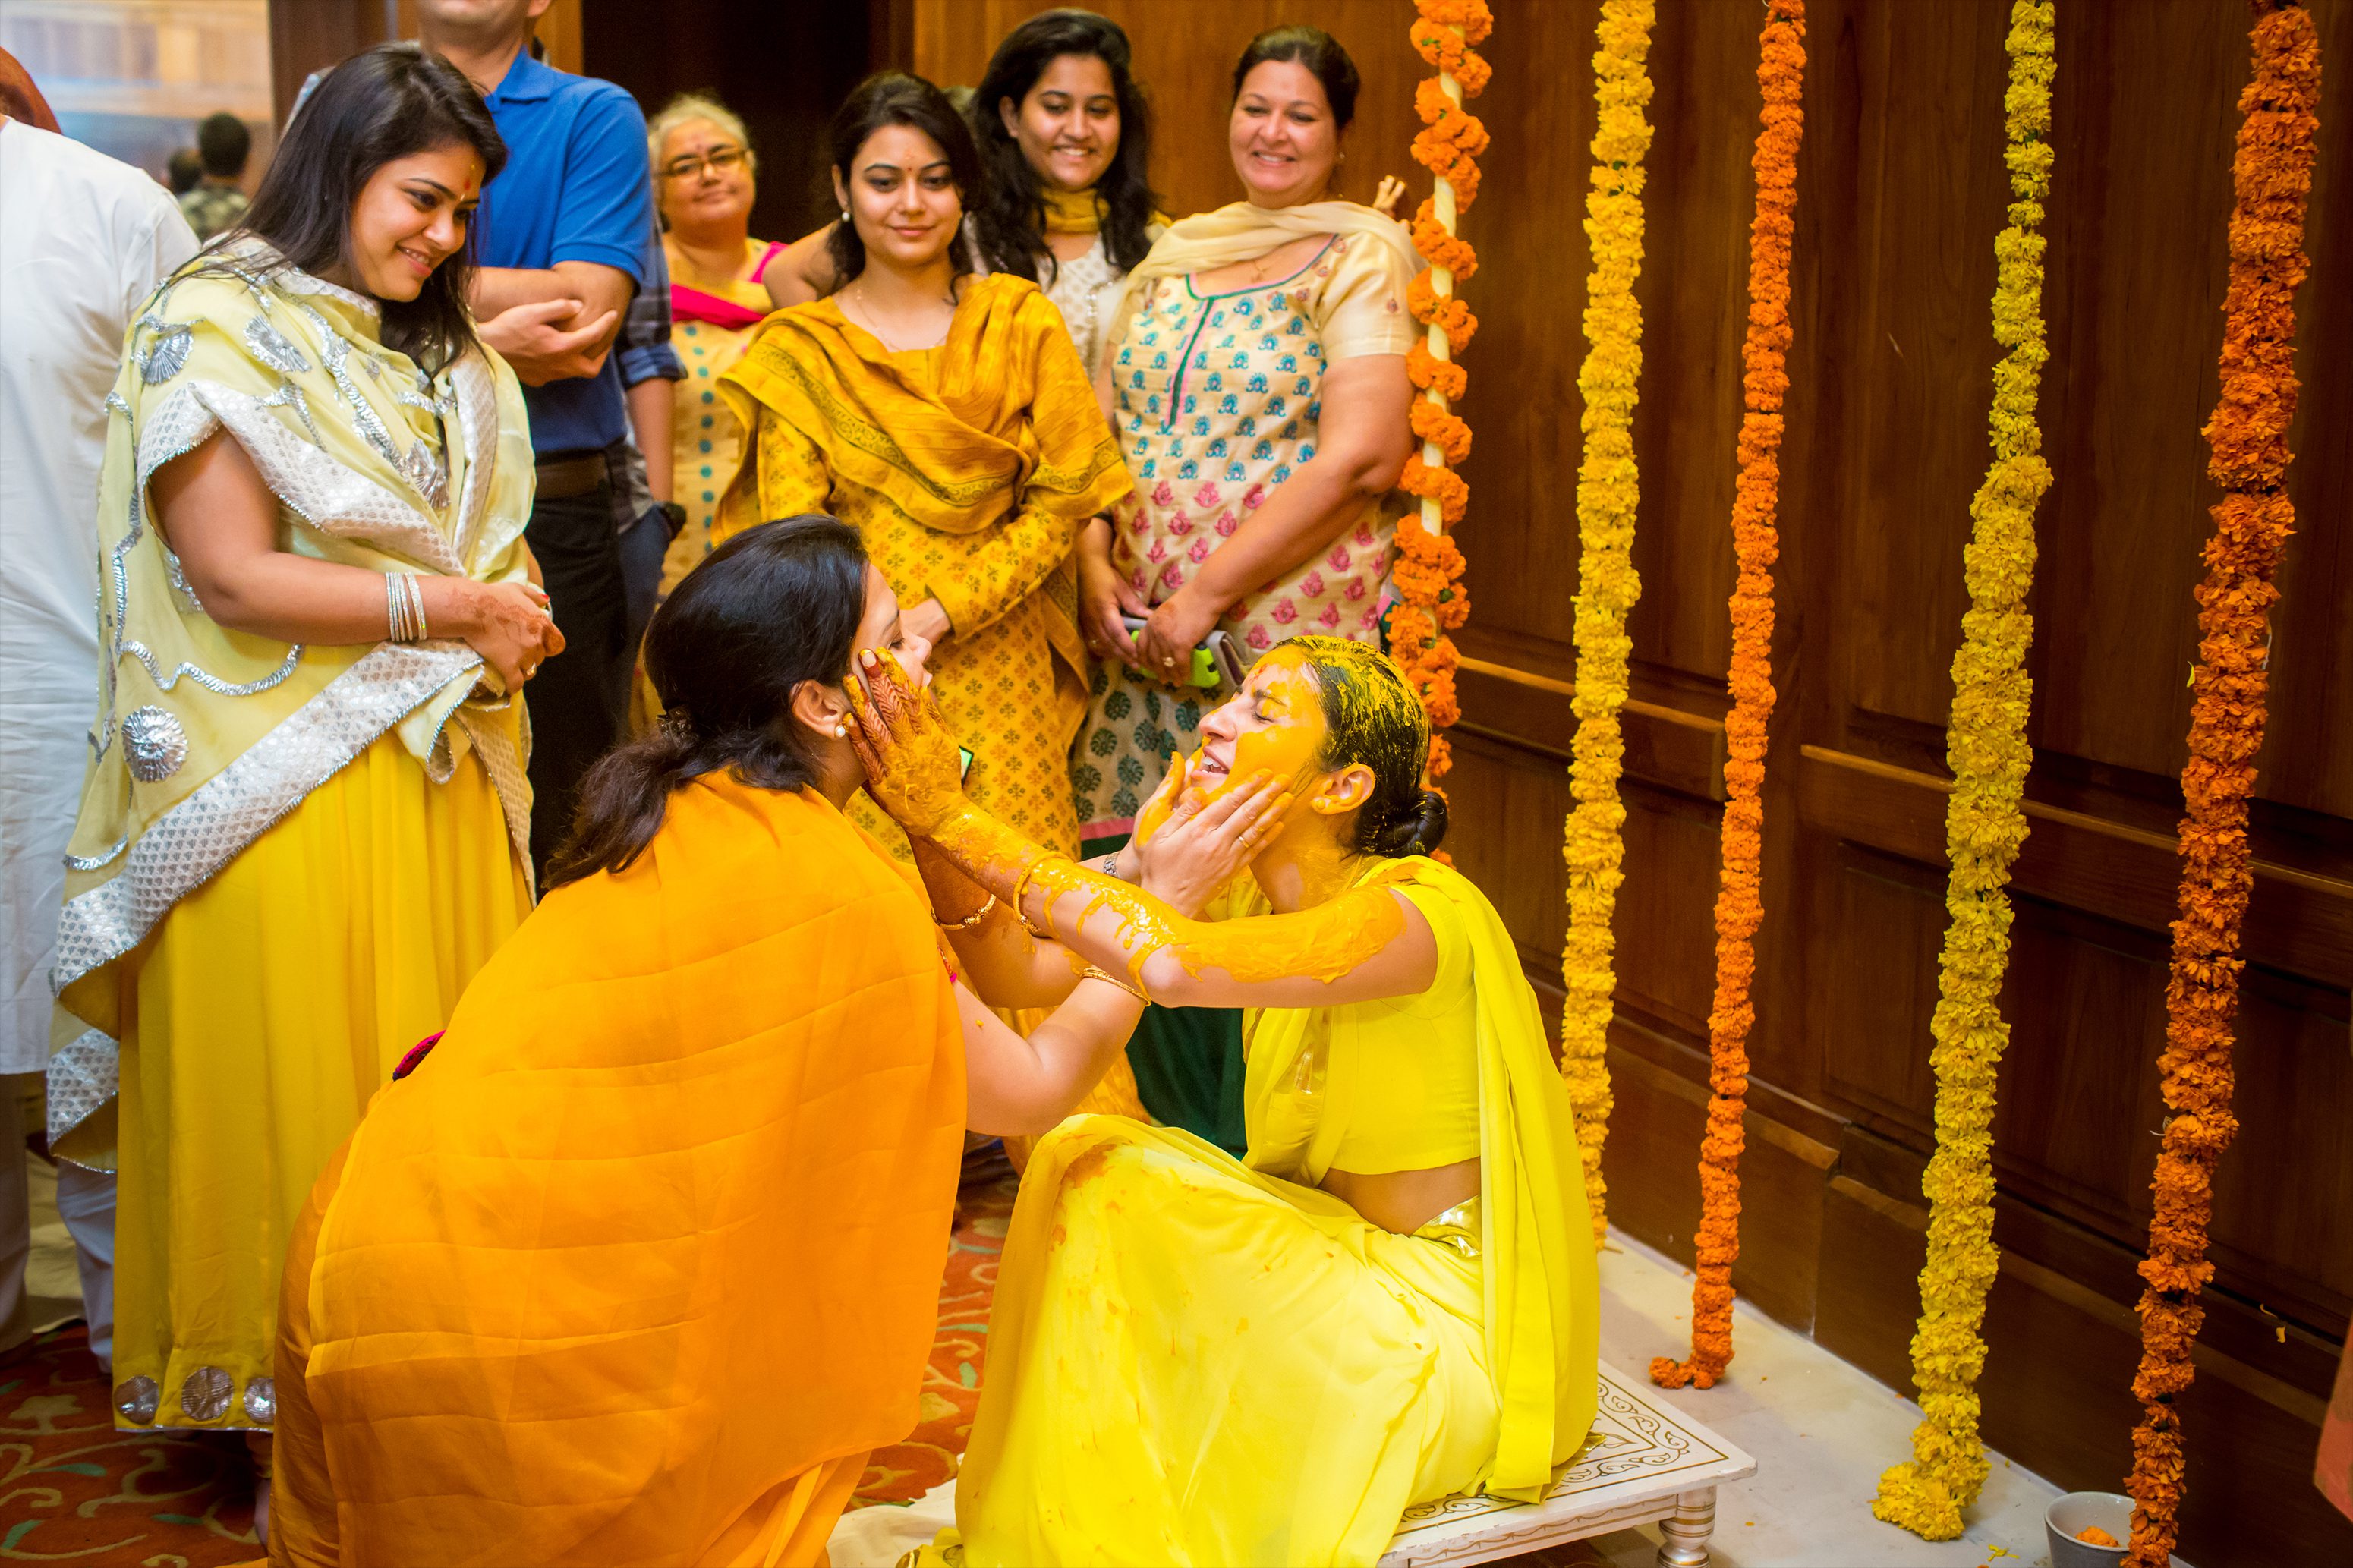 Destination Wedding Photoshoot in Park Hyatt Goa India